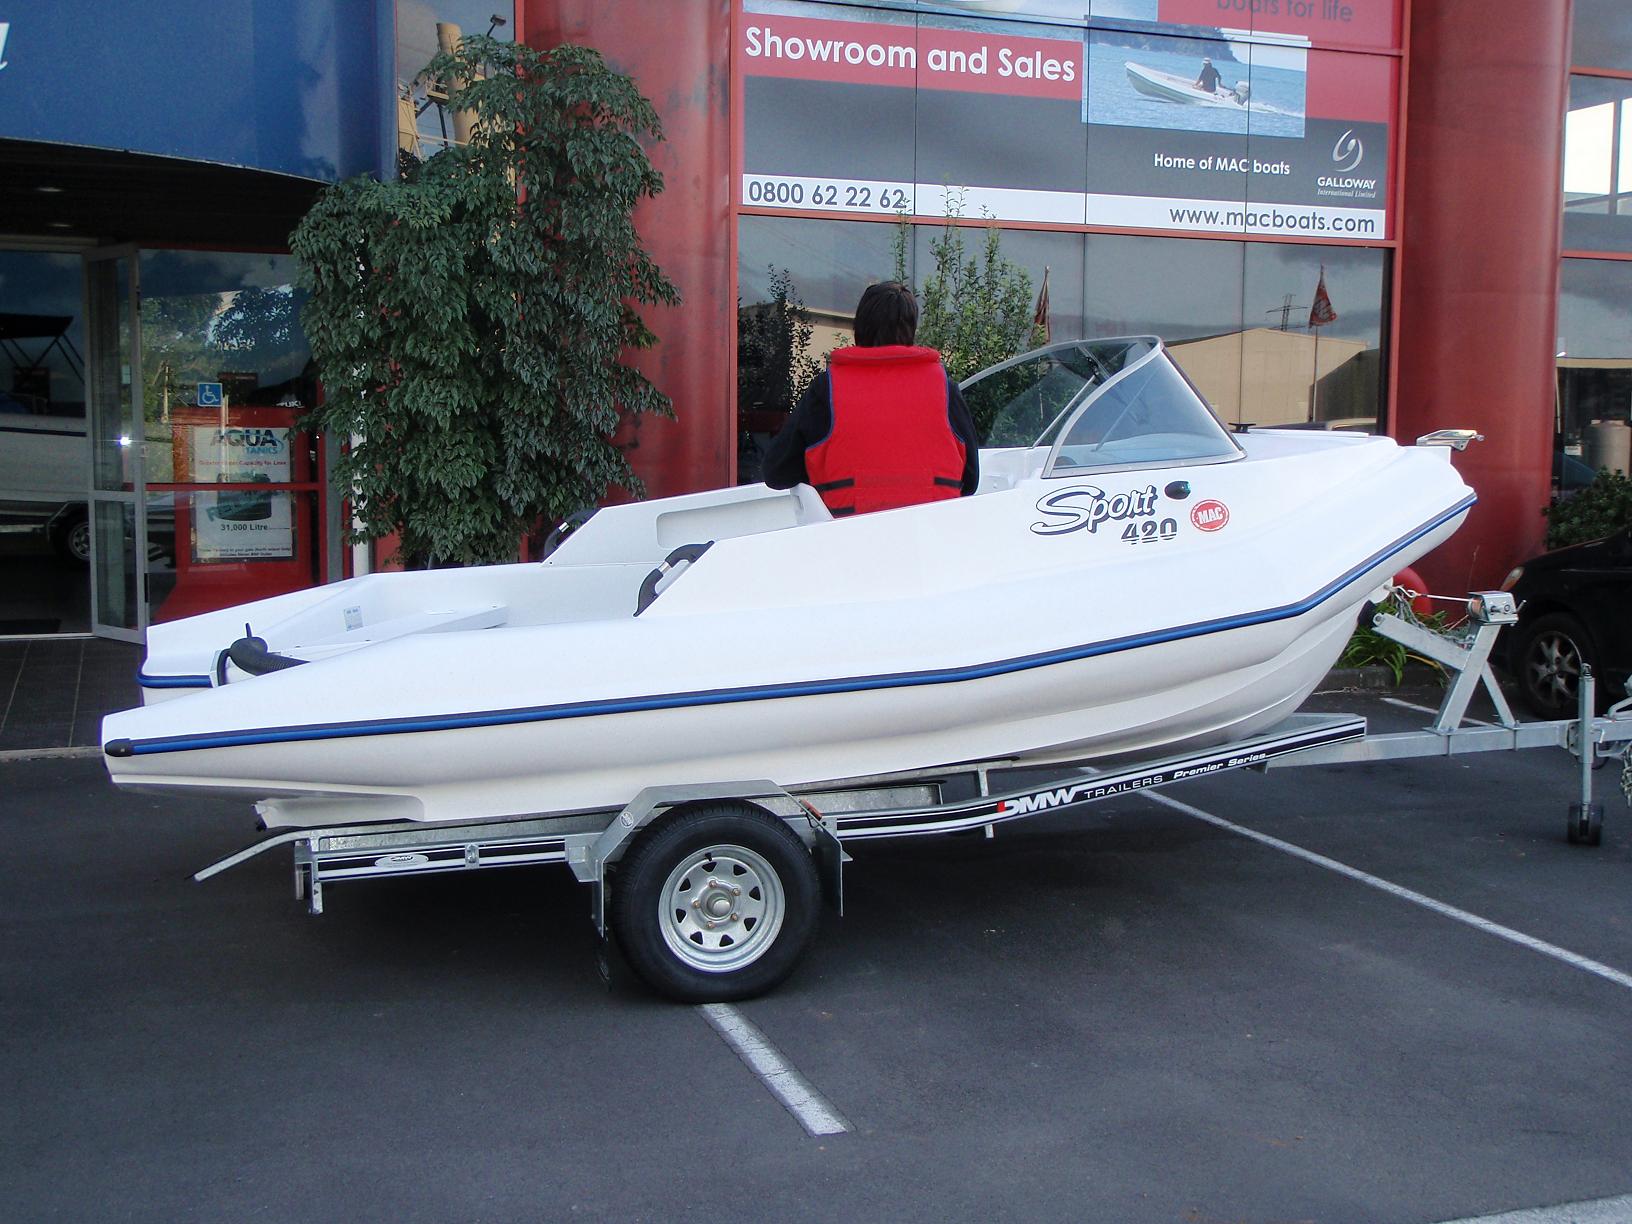 MAC 420 Sport - MAC Boats